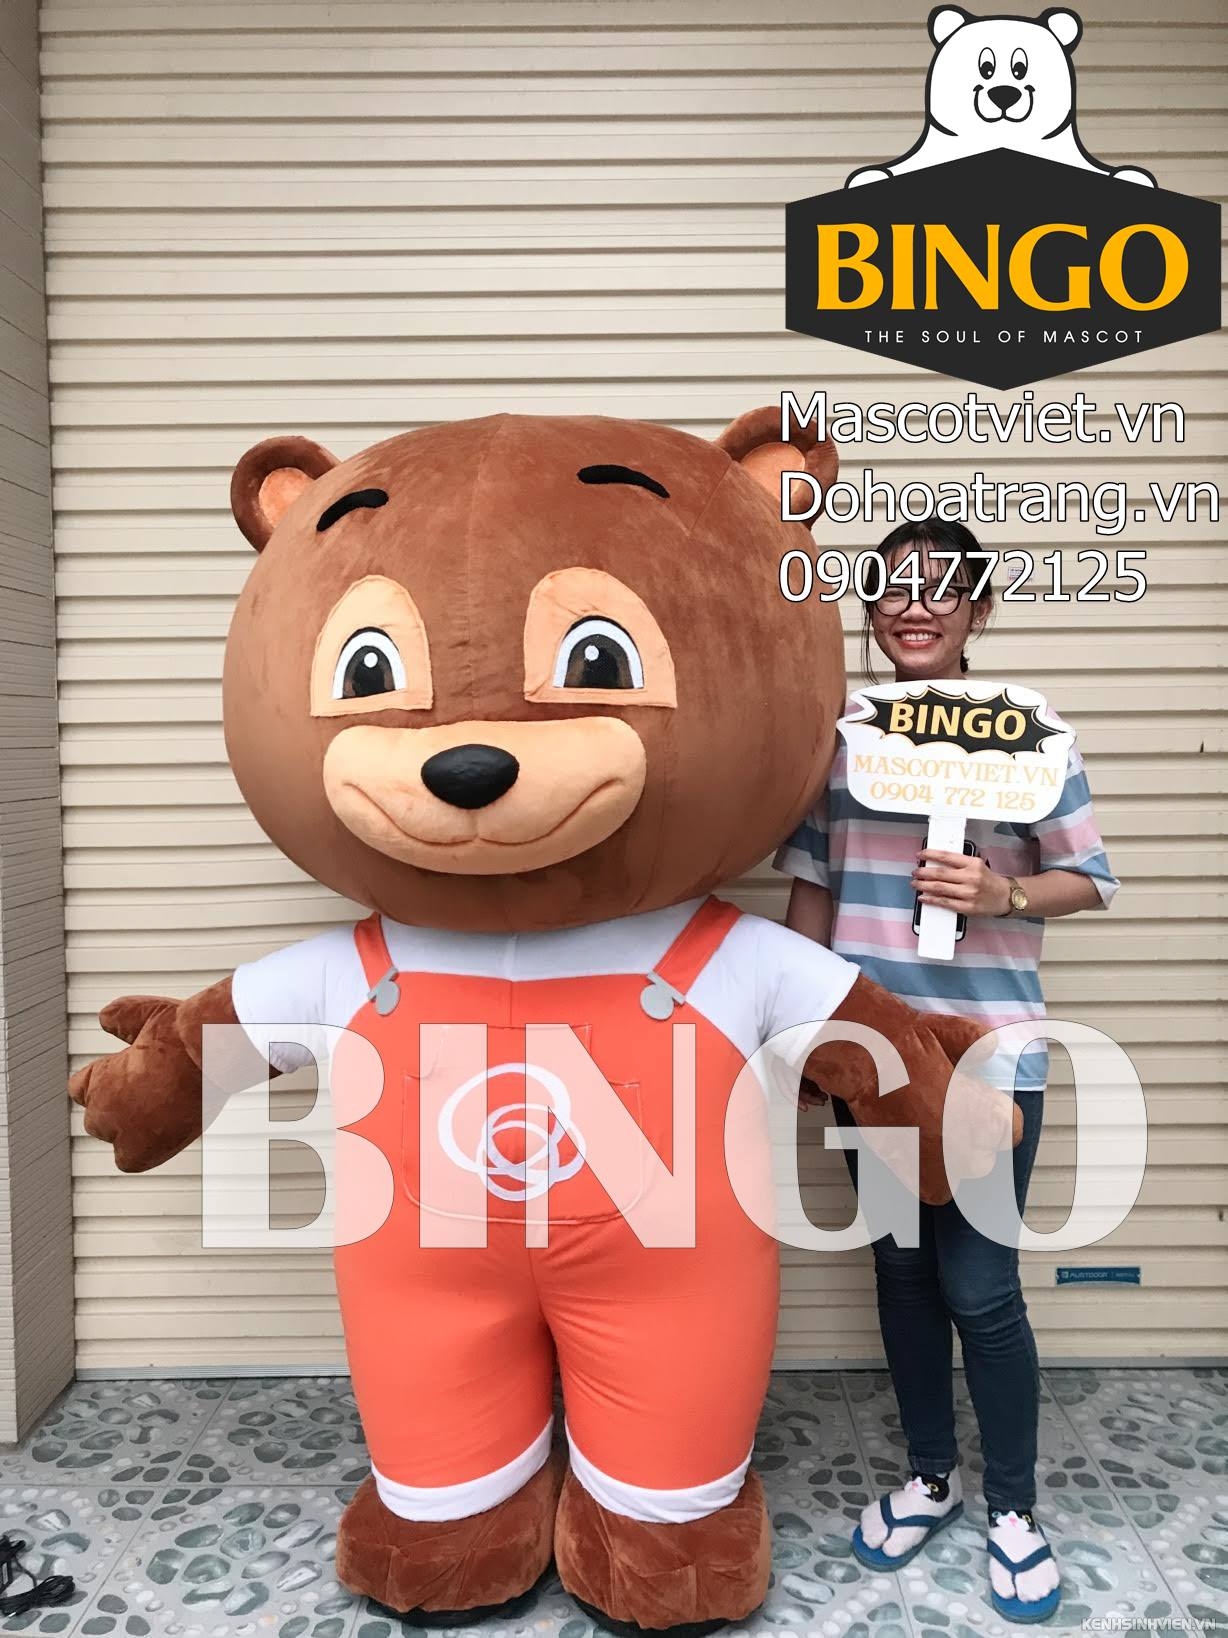 mascot-hoi-con-gau-02-bingo-costumes-0904772125.jpg